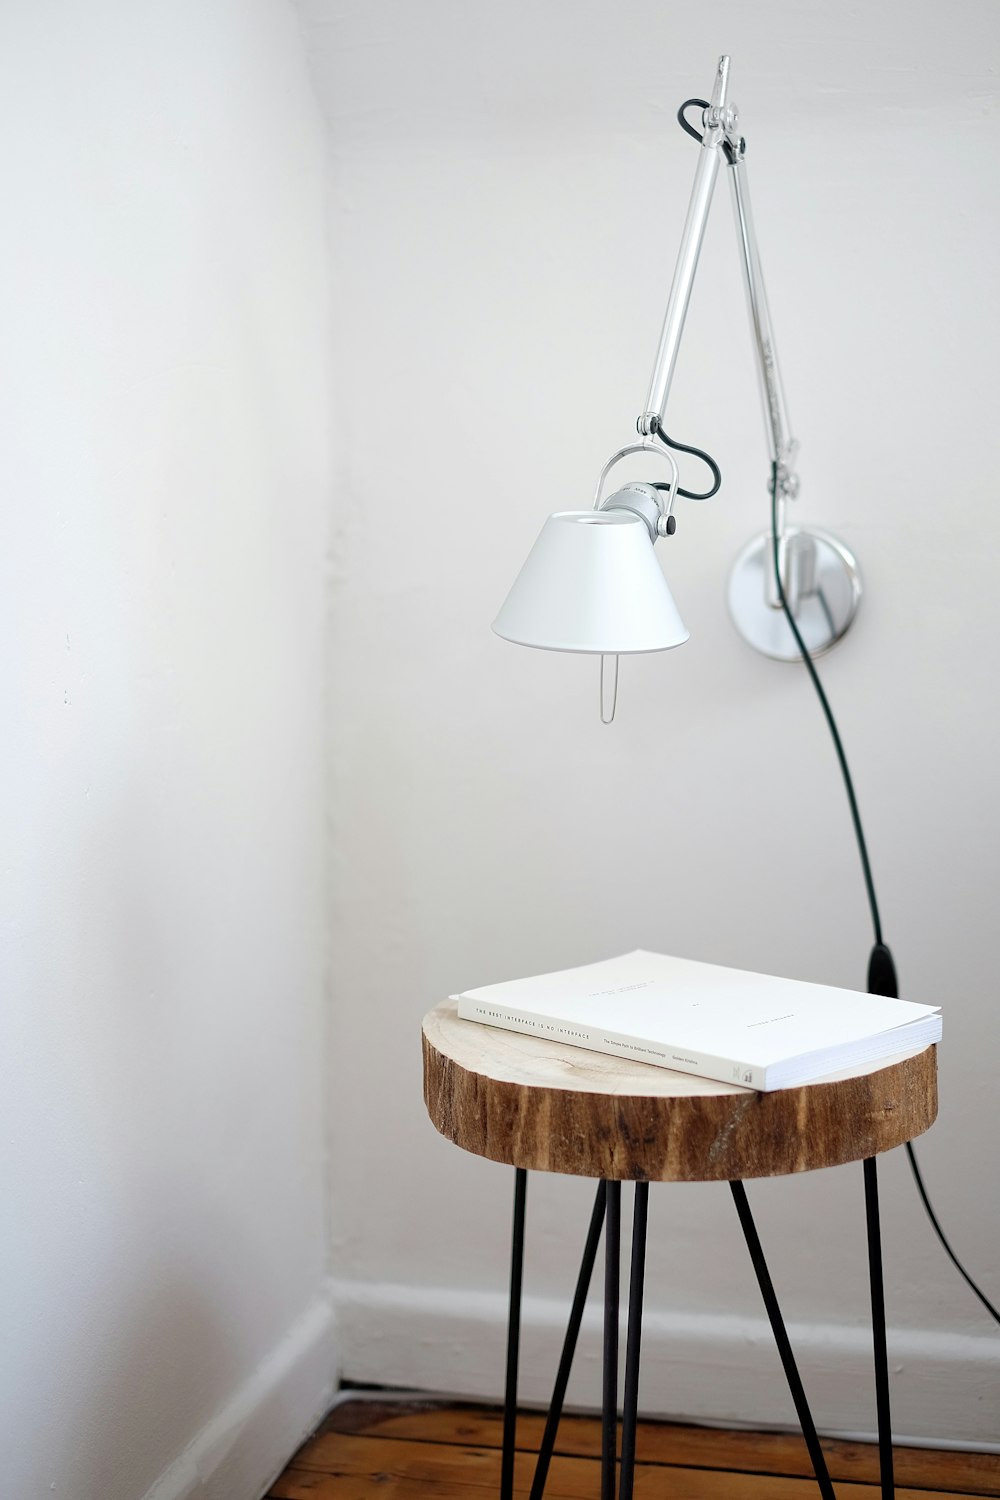 brown wooden table on white background photo – Free Karaj Image on Unsplash